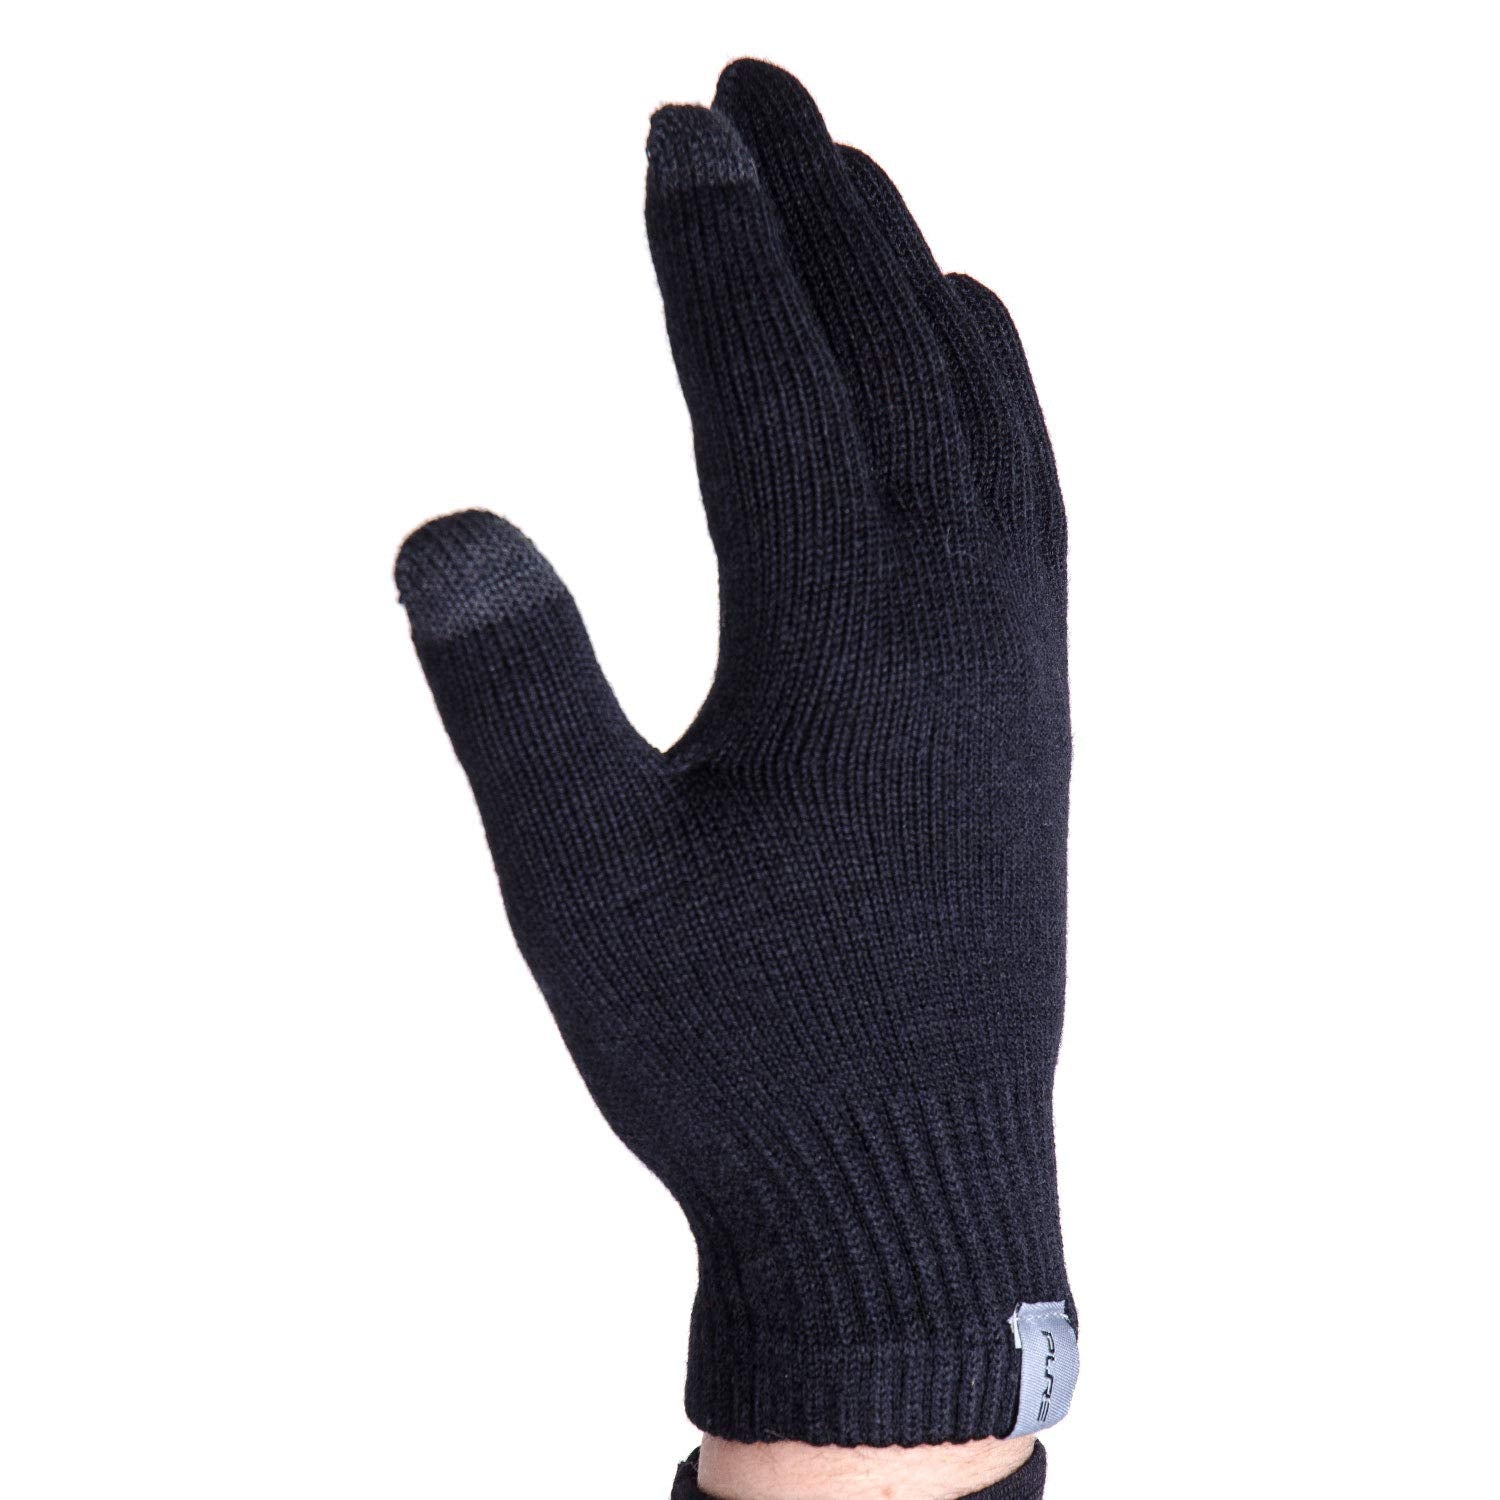 Wool Ski Glove Liner